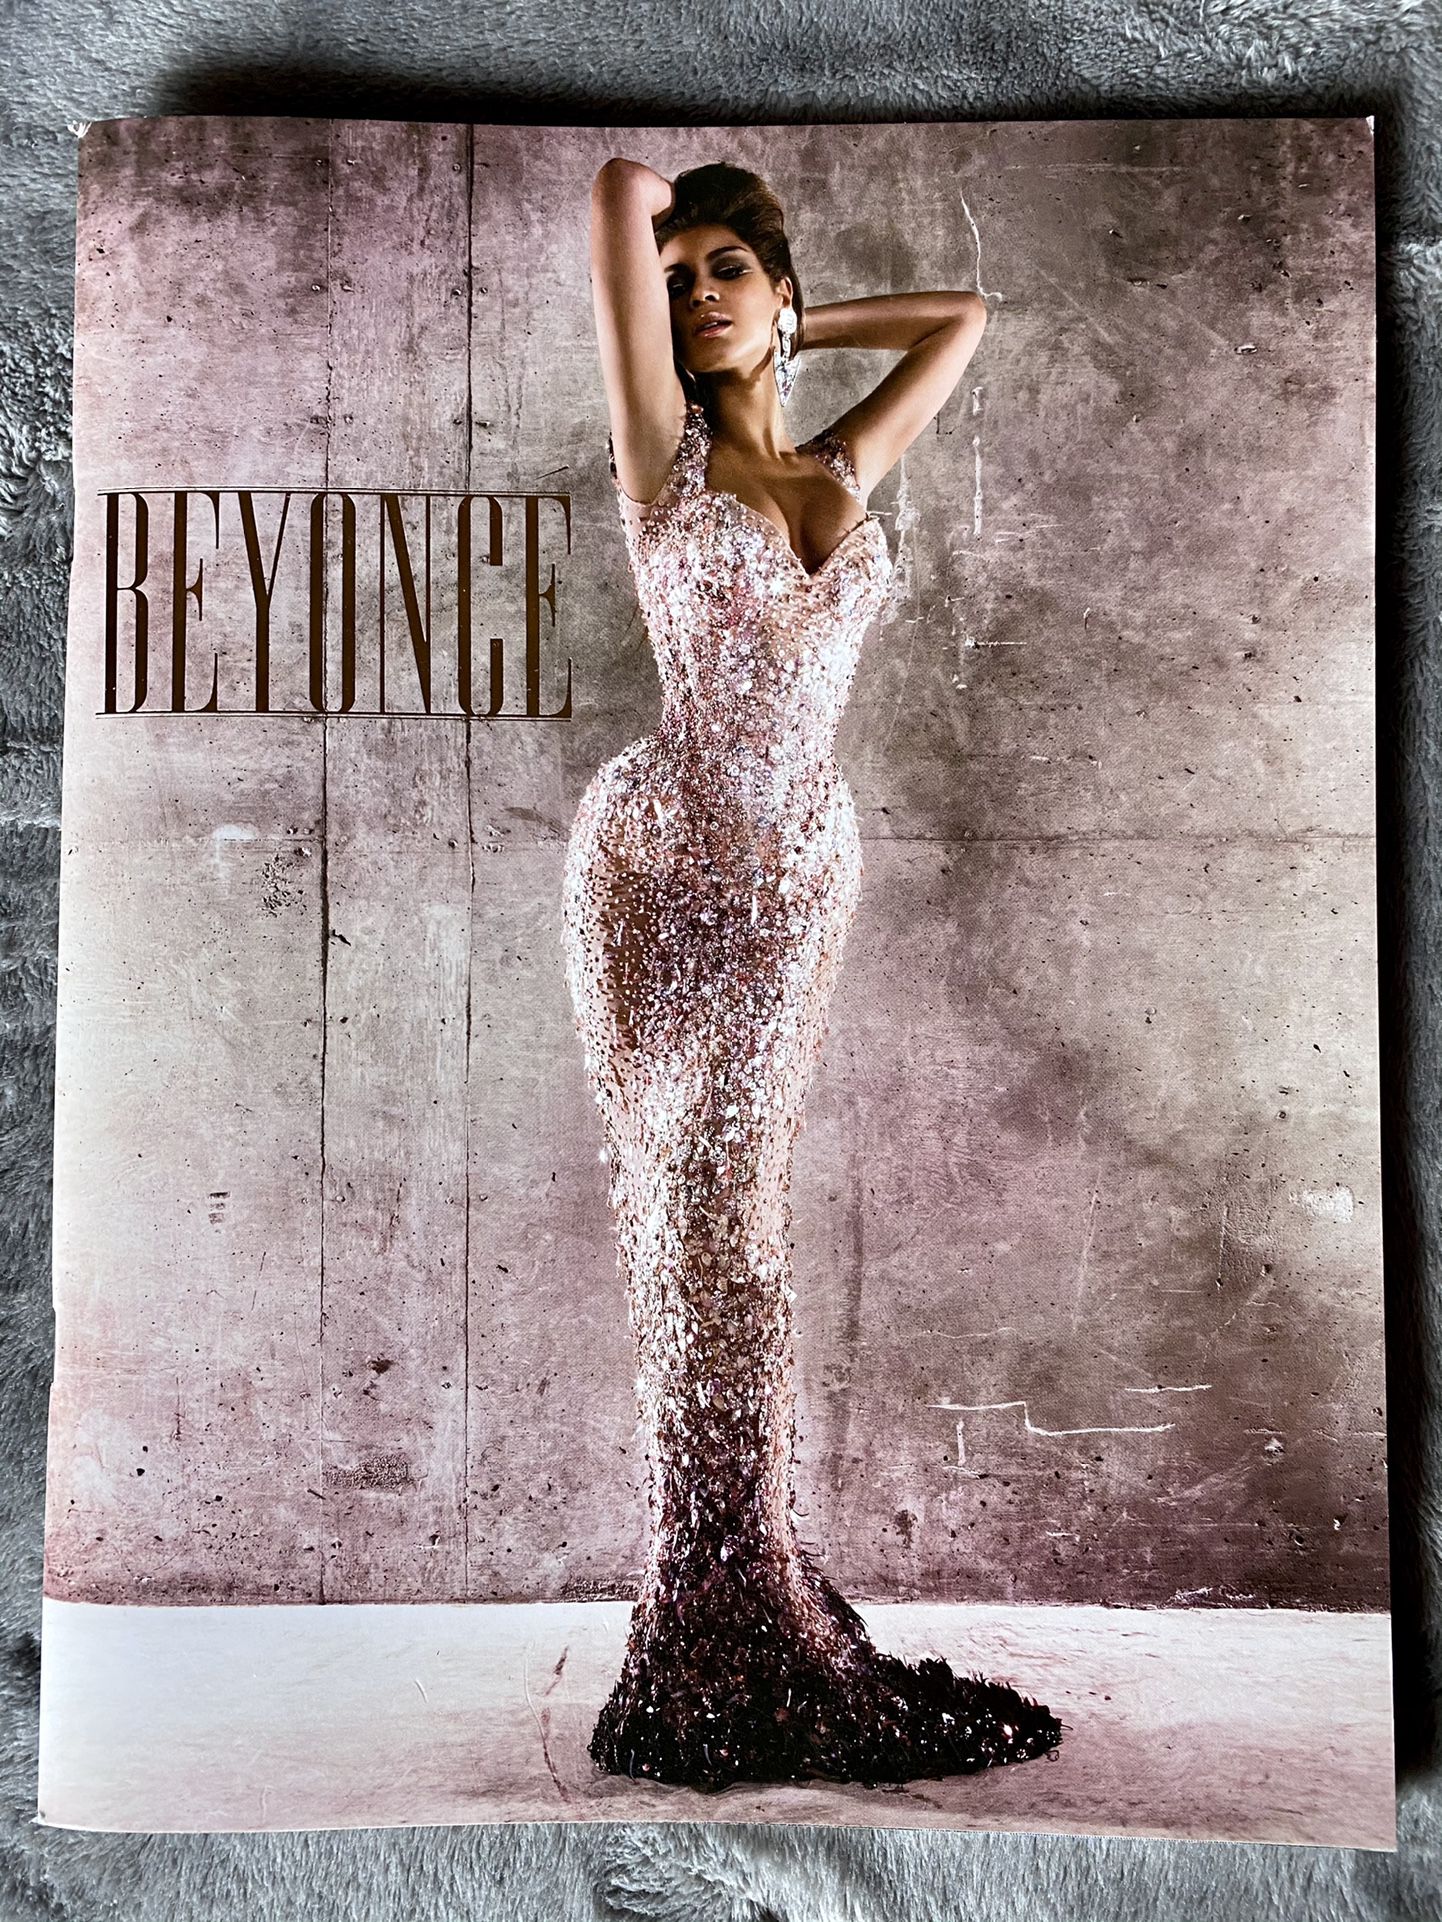 Beyoncé | I am Sasha Fierce LARGE Tour Book | 2009 Tour